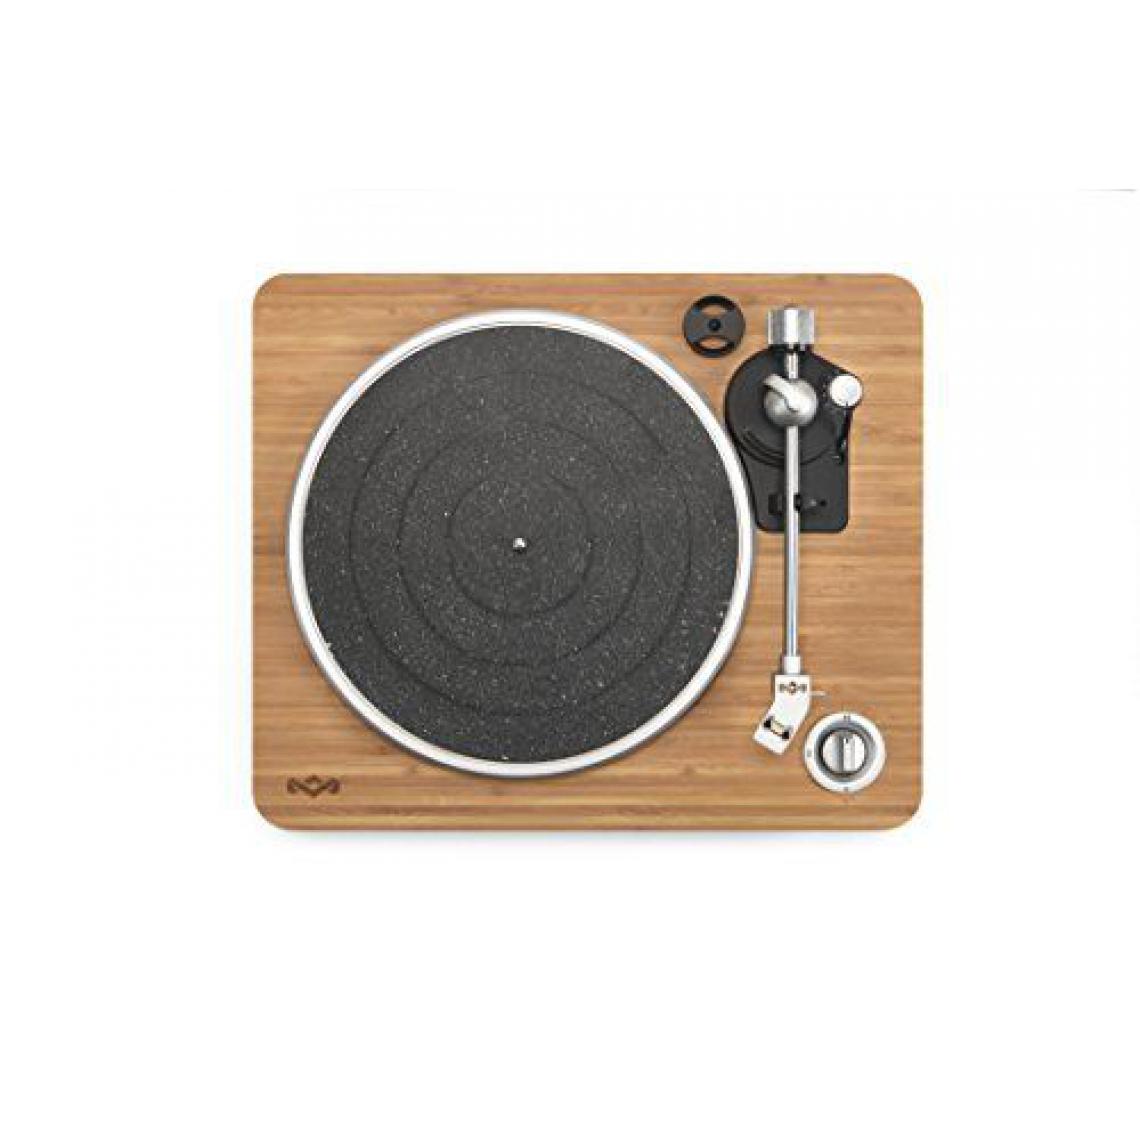 Inconnu - HOUSE OF MARLEY Platine Vinyle Premium avec Cartouche audiotechnica- Stir it up - Platine